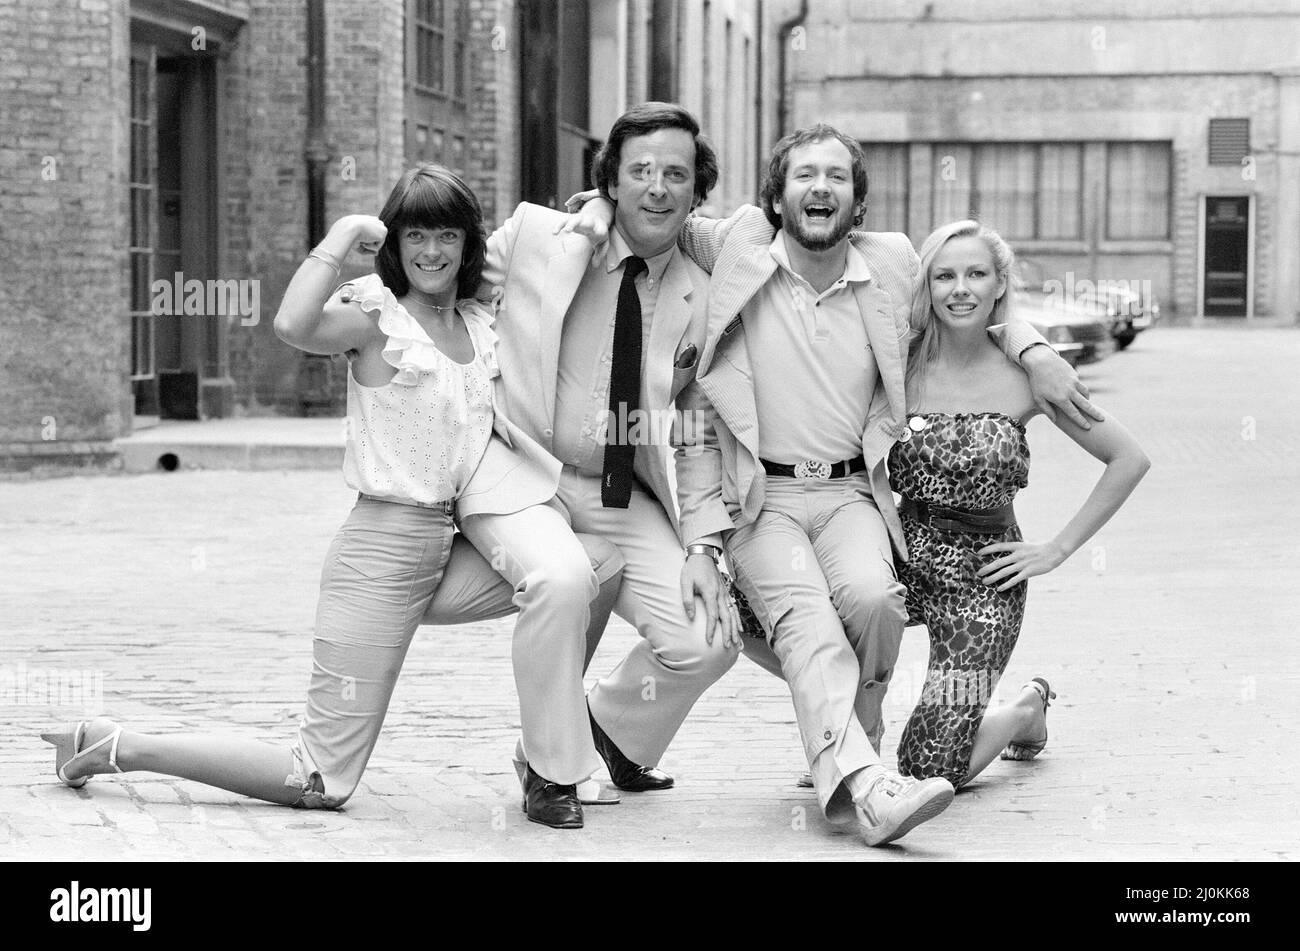 BBC Autumn Schedule Photo-call, 13th July 1981. Terry Wogan, Isla St Clair, Kenny Everett and Pamela Stephenson. Stock Photo